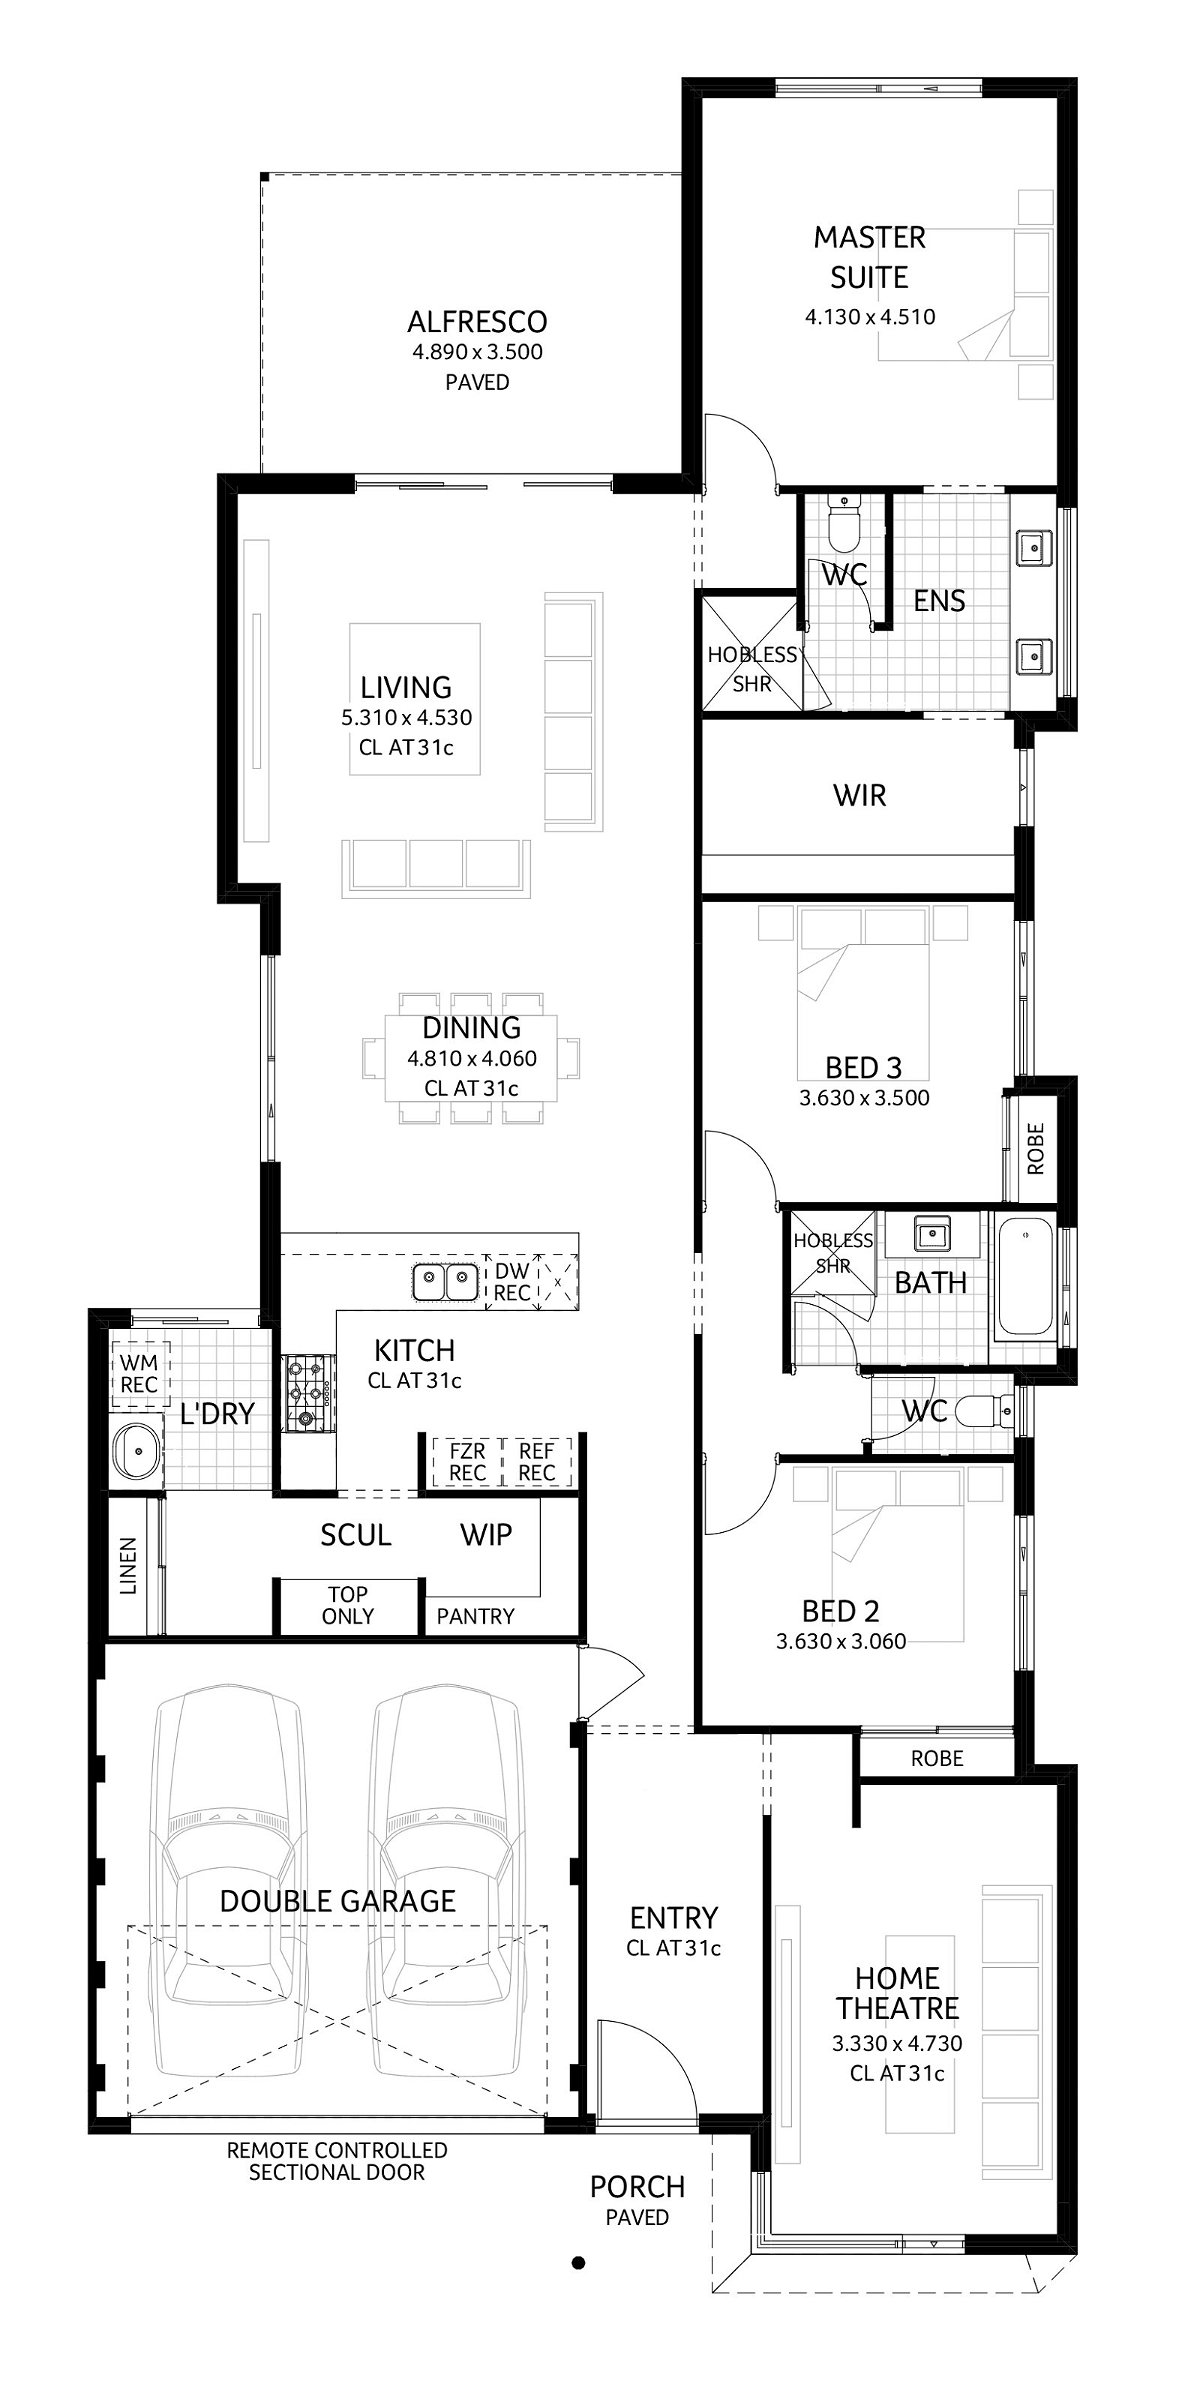 Plunkett Homes - Ningaloo | Contemporary - Floorplan - Ningaloo Luxe Contemporary Marketing Plan Croppedjpg